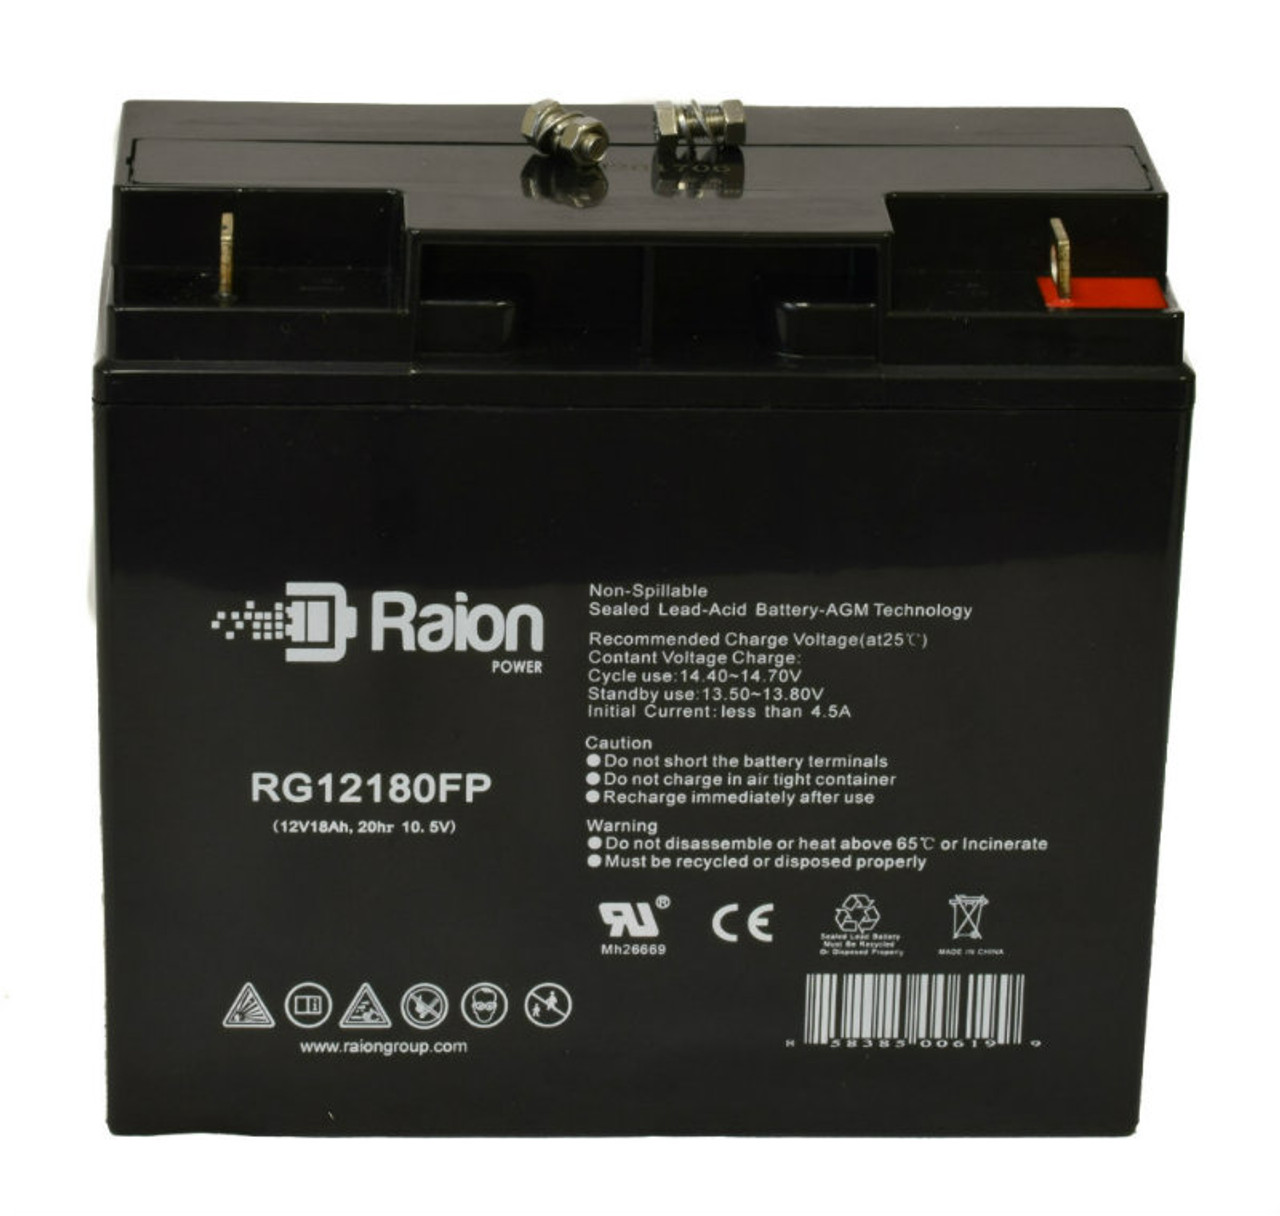 Raion Power RG12180FP 12V 18Ah Lead Acid Battery for Vasworld Power GB12-20